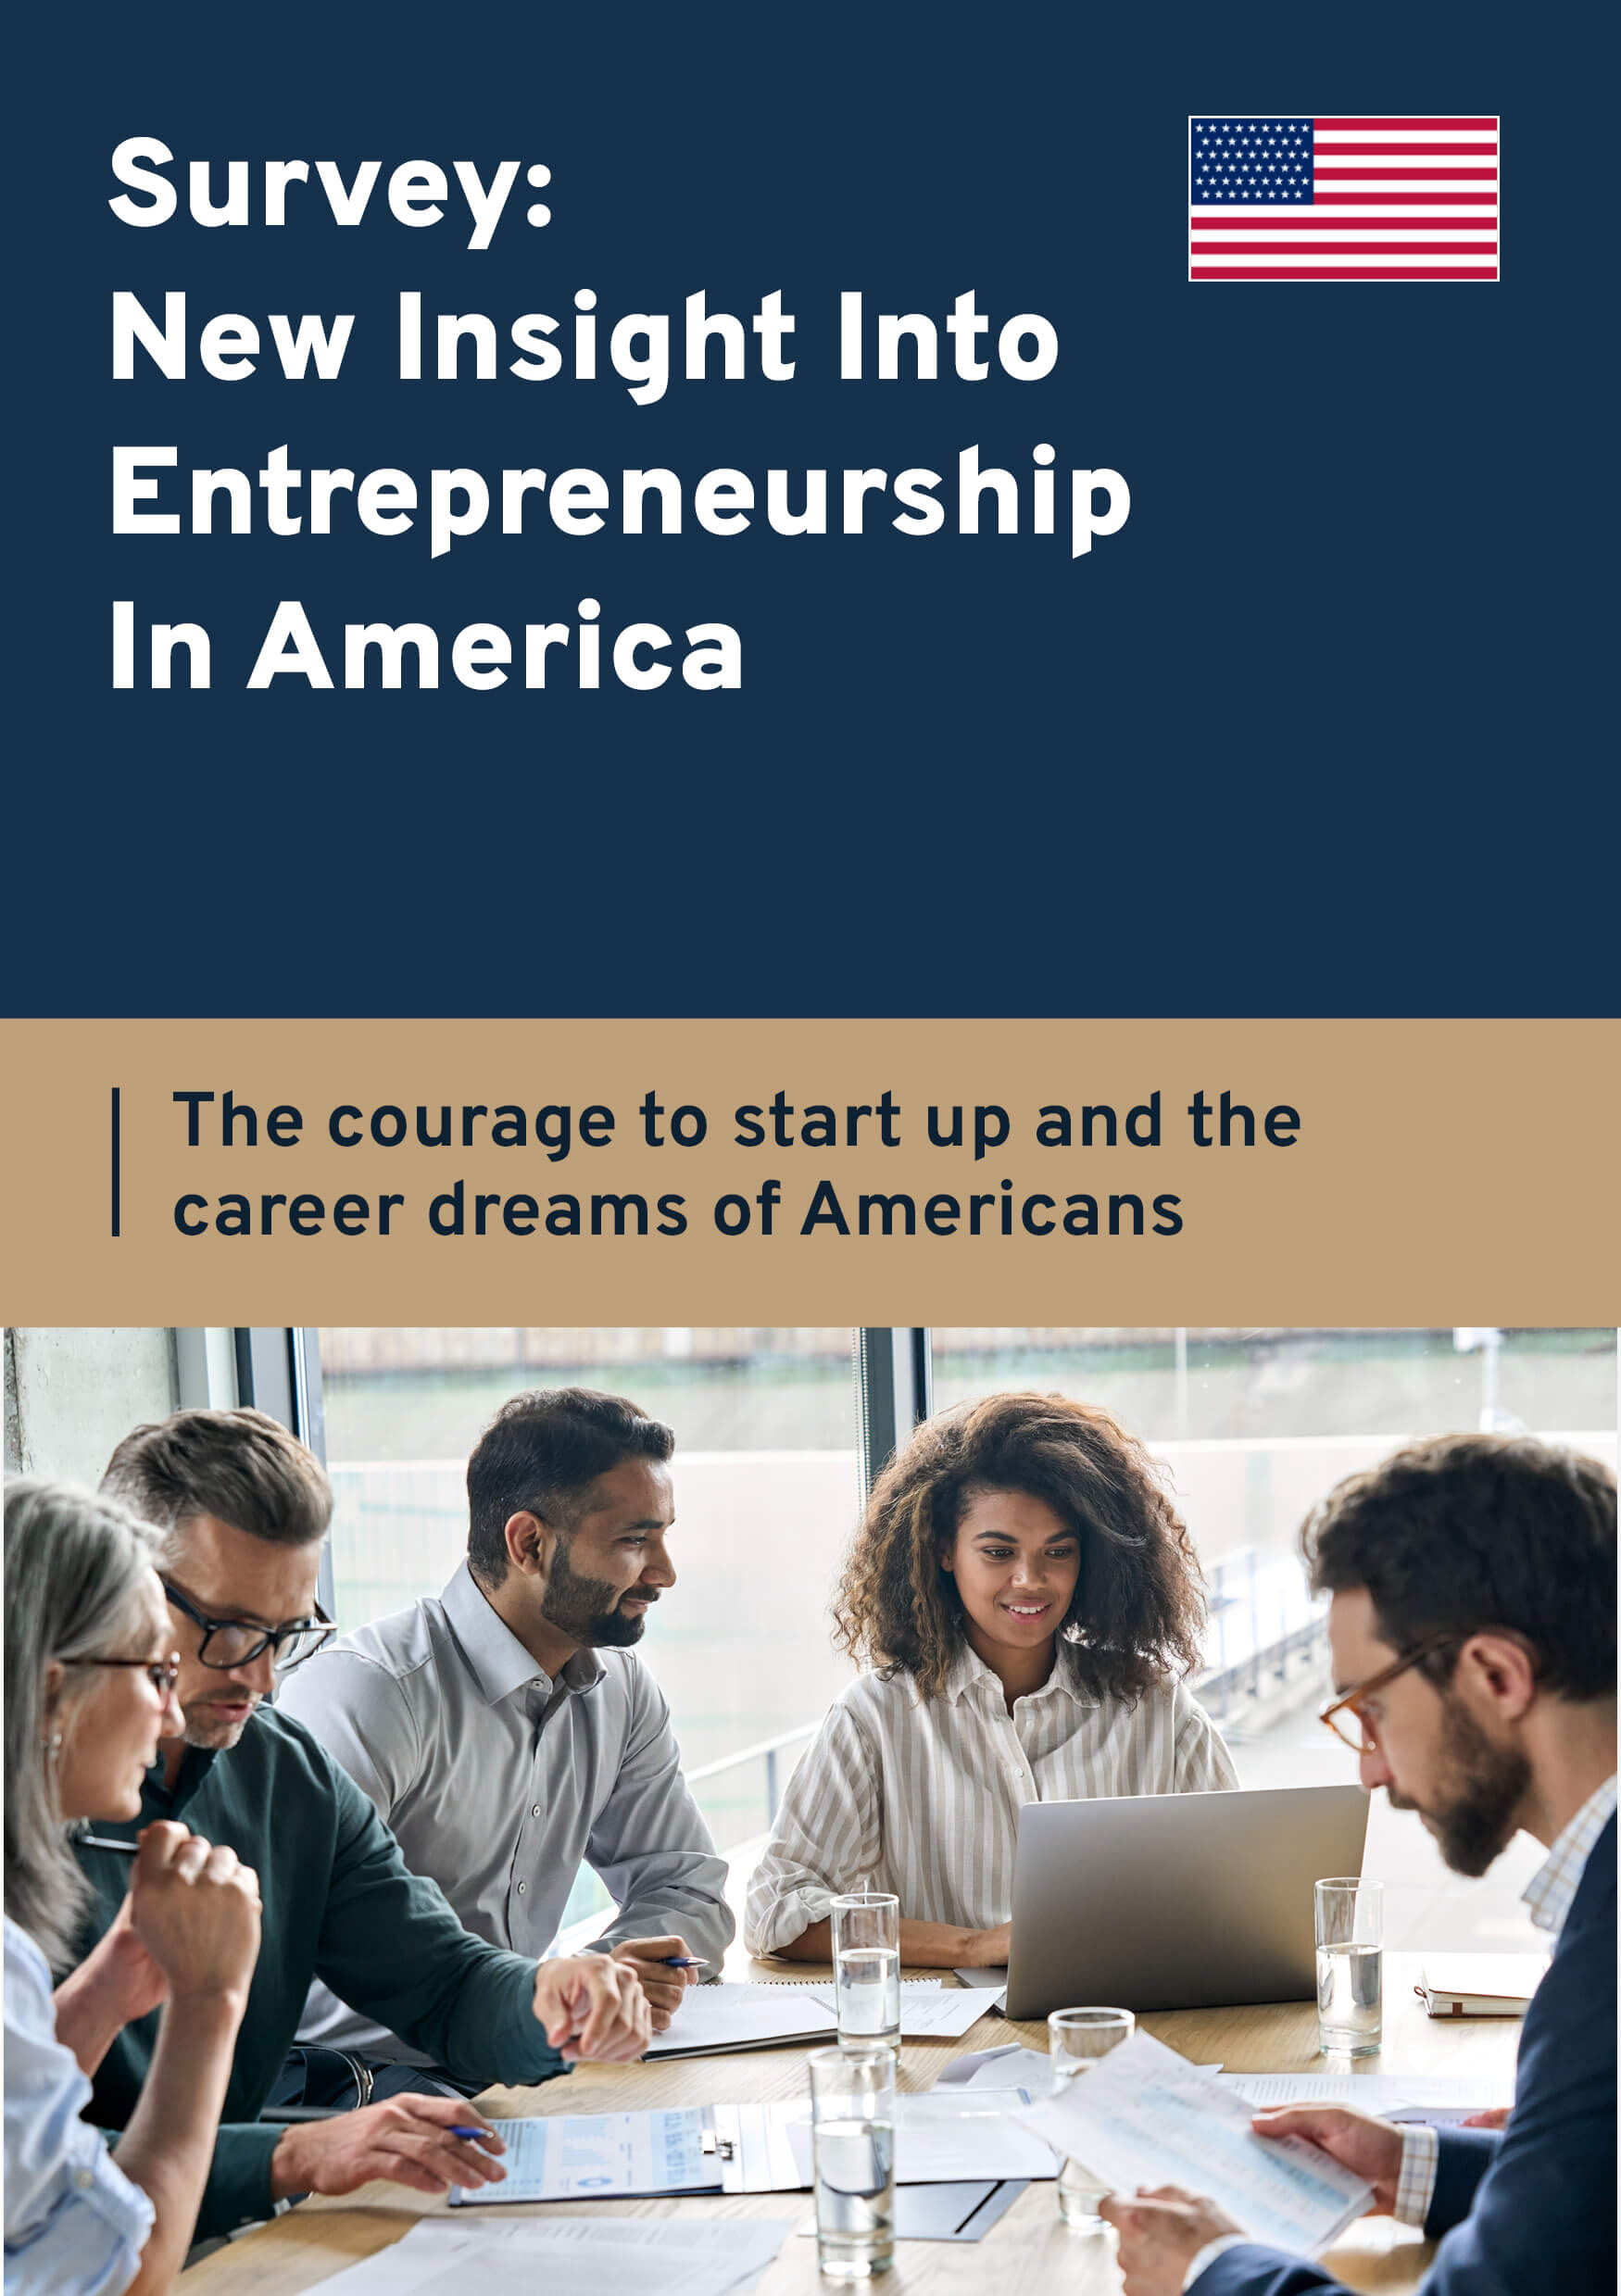 New Insight Into Entrepreneurship In America